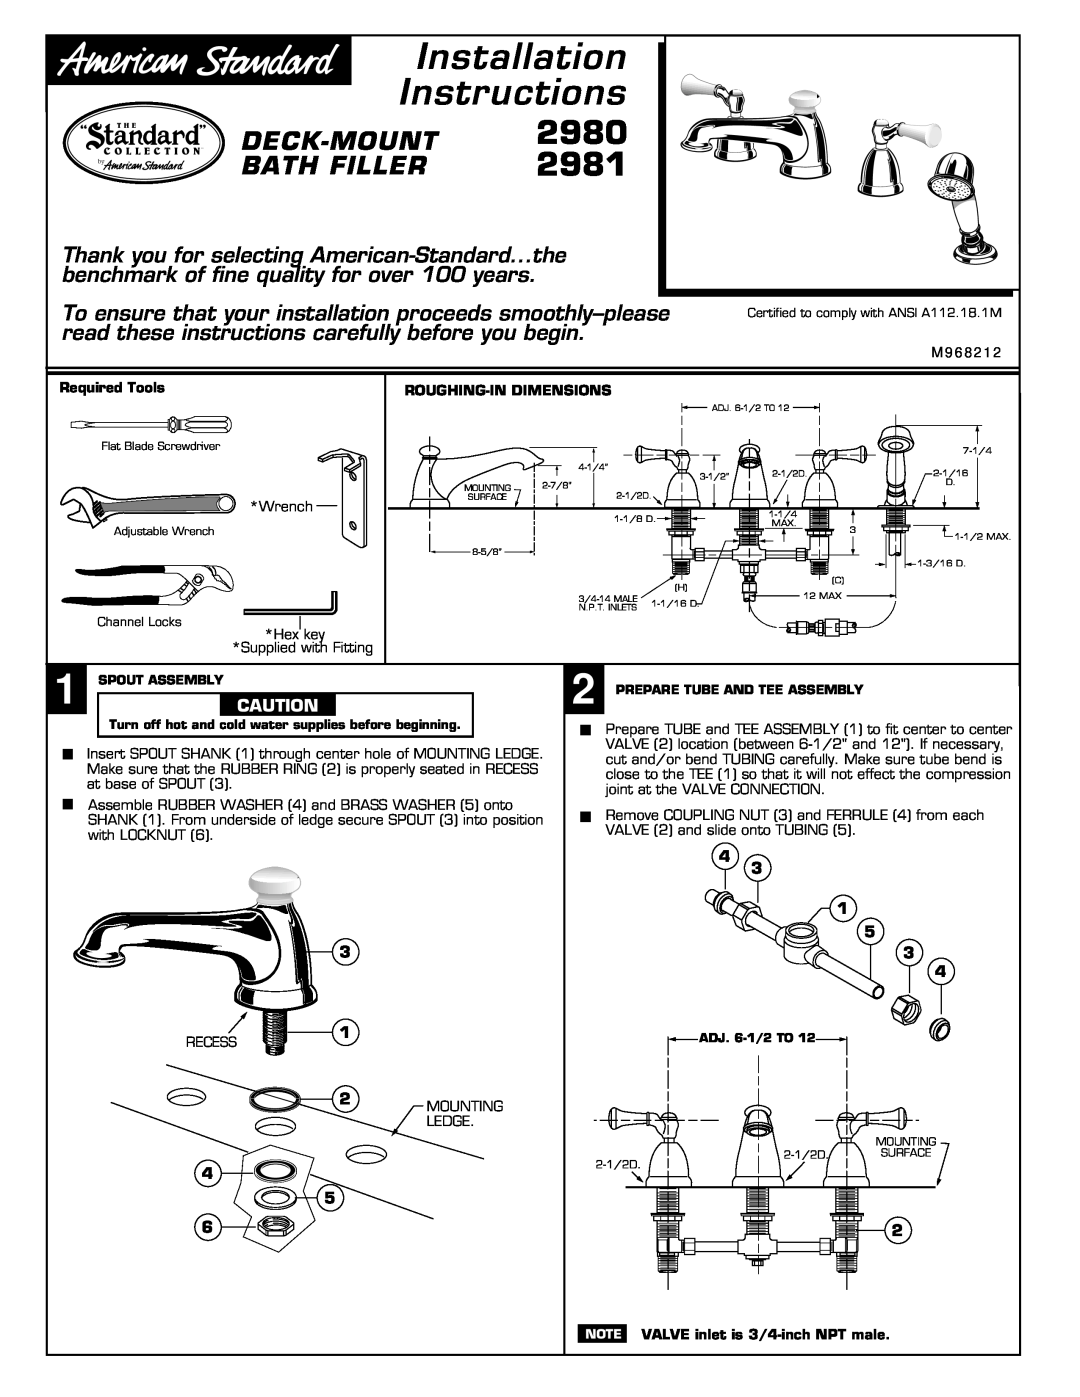 American Standard 2981 installation instructions Deck-Mountbath Filler, Installation Instructions, 2980 